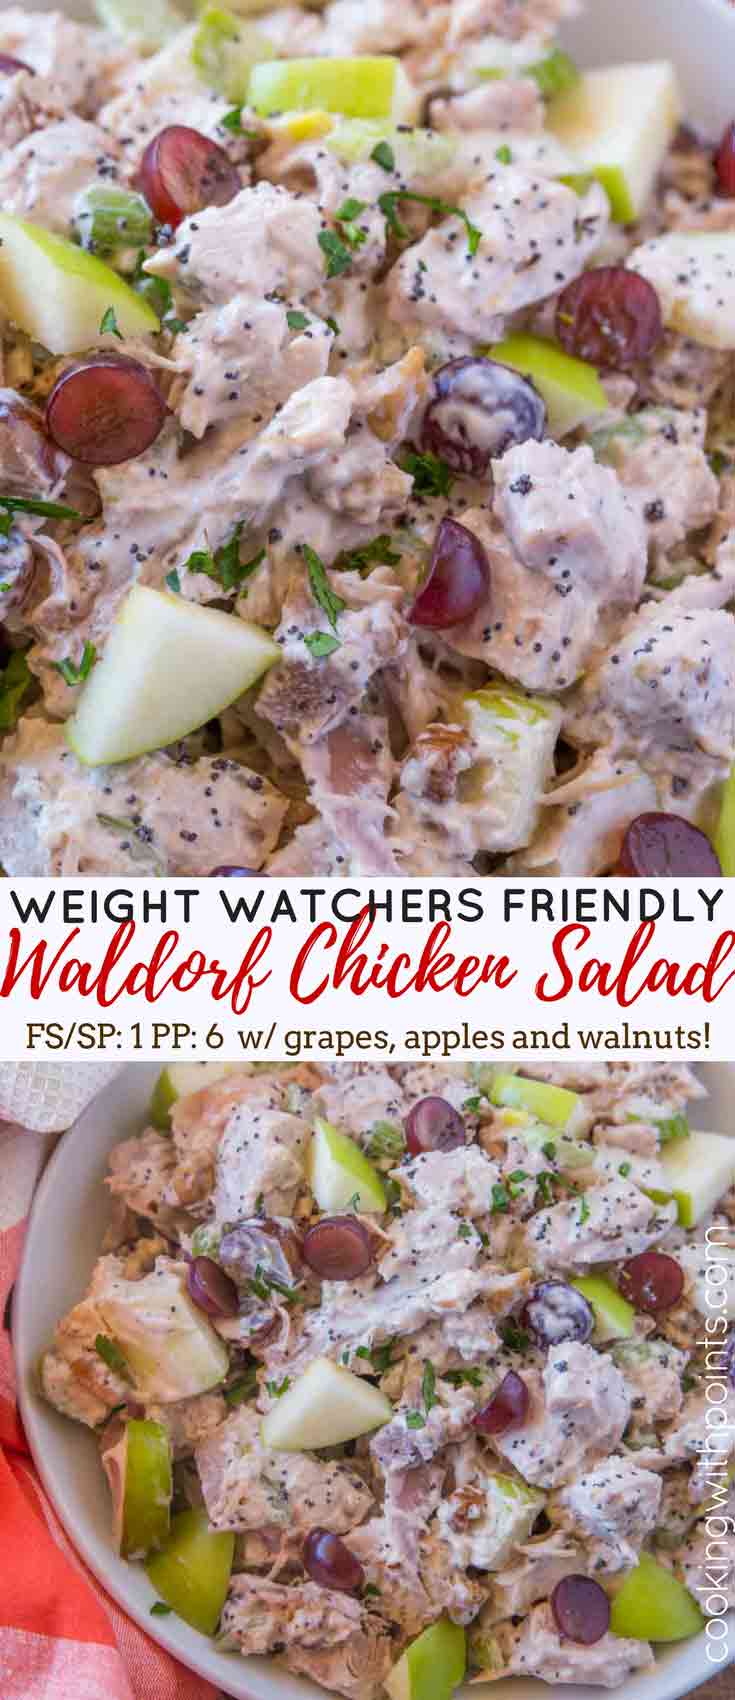 Healthy Waldorf Chicken Salad